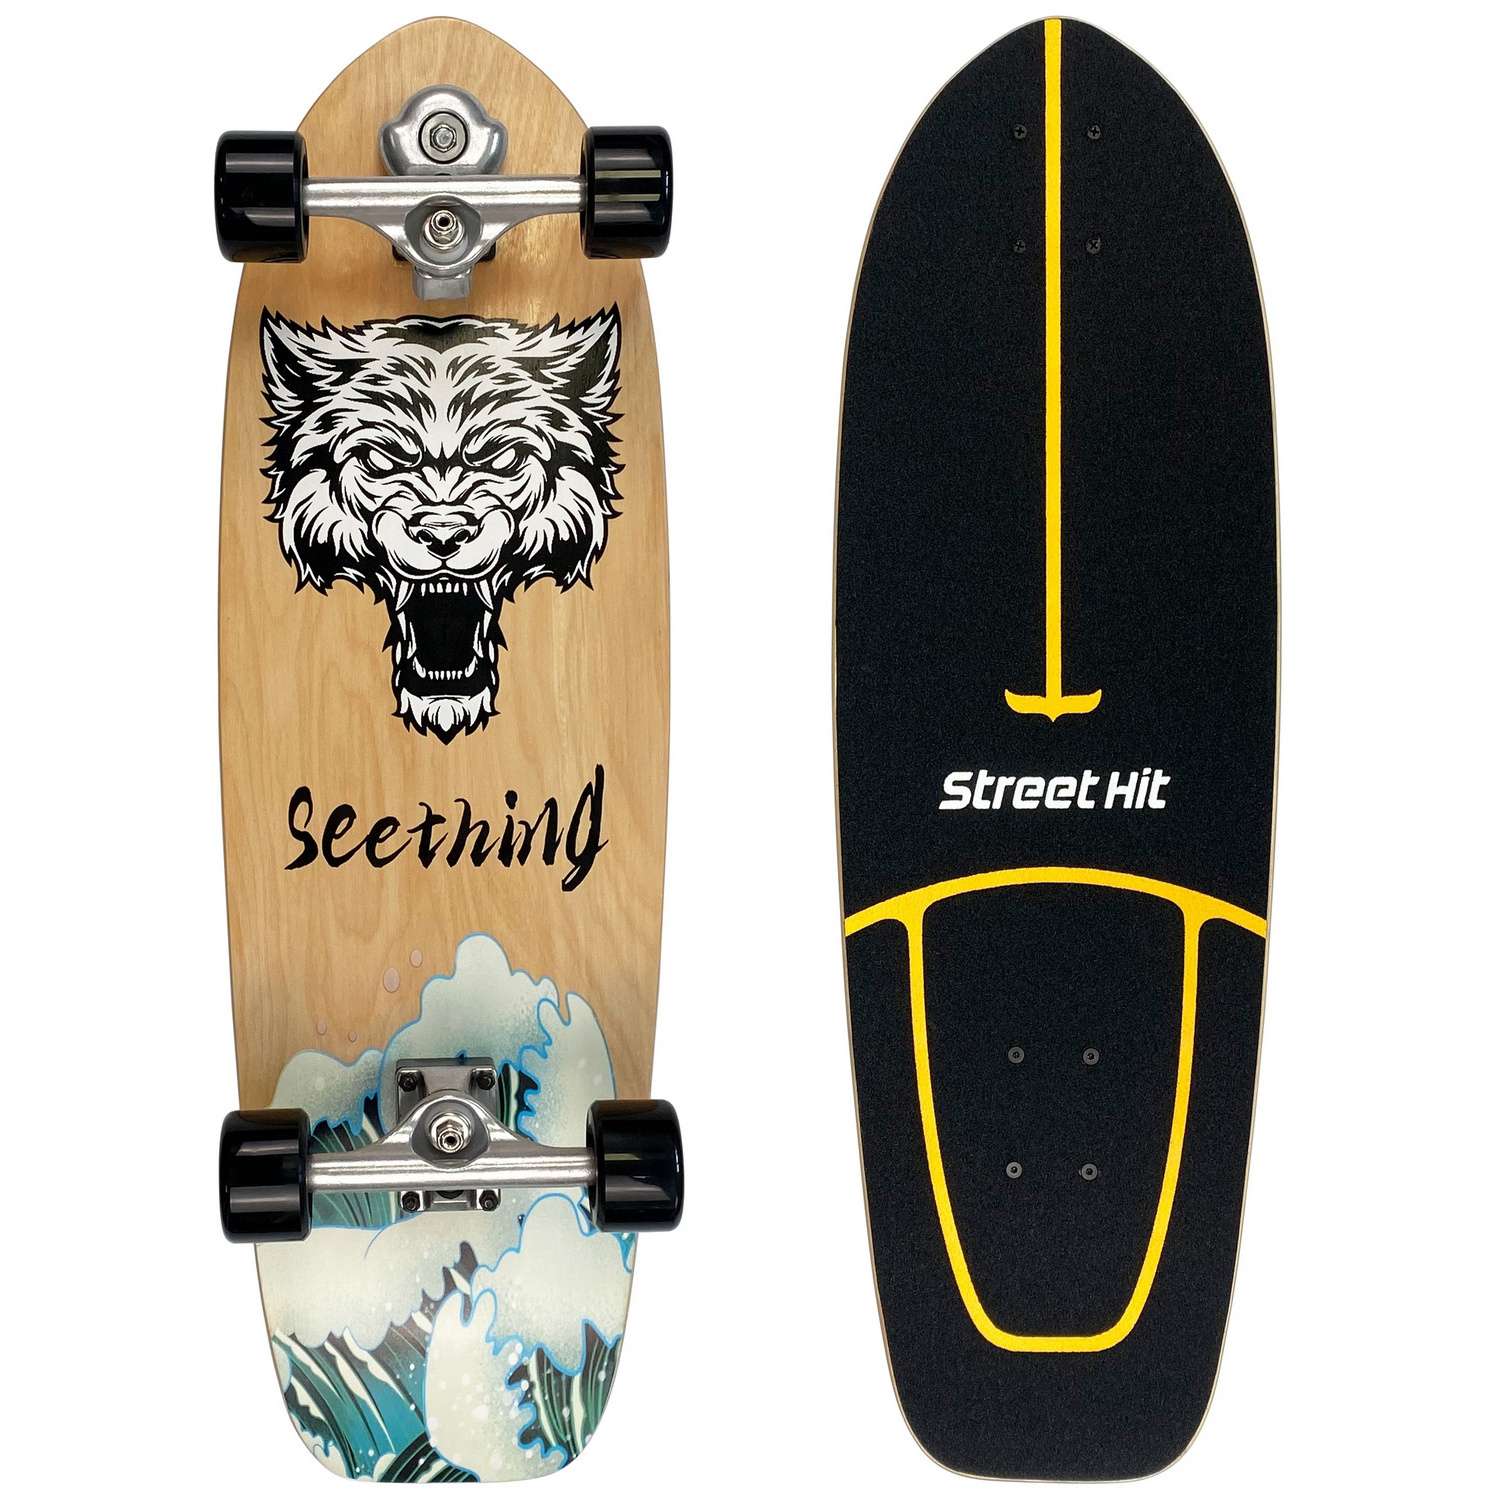 Скейтборд Street Hit деревянный SurfSkate SEETHING-2 - фото 2